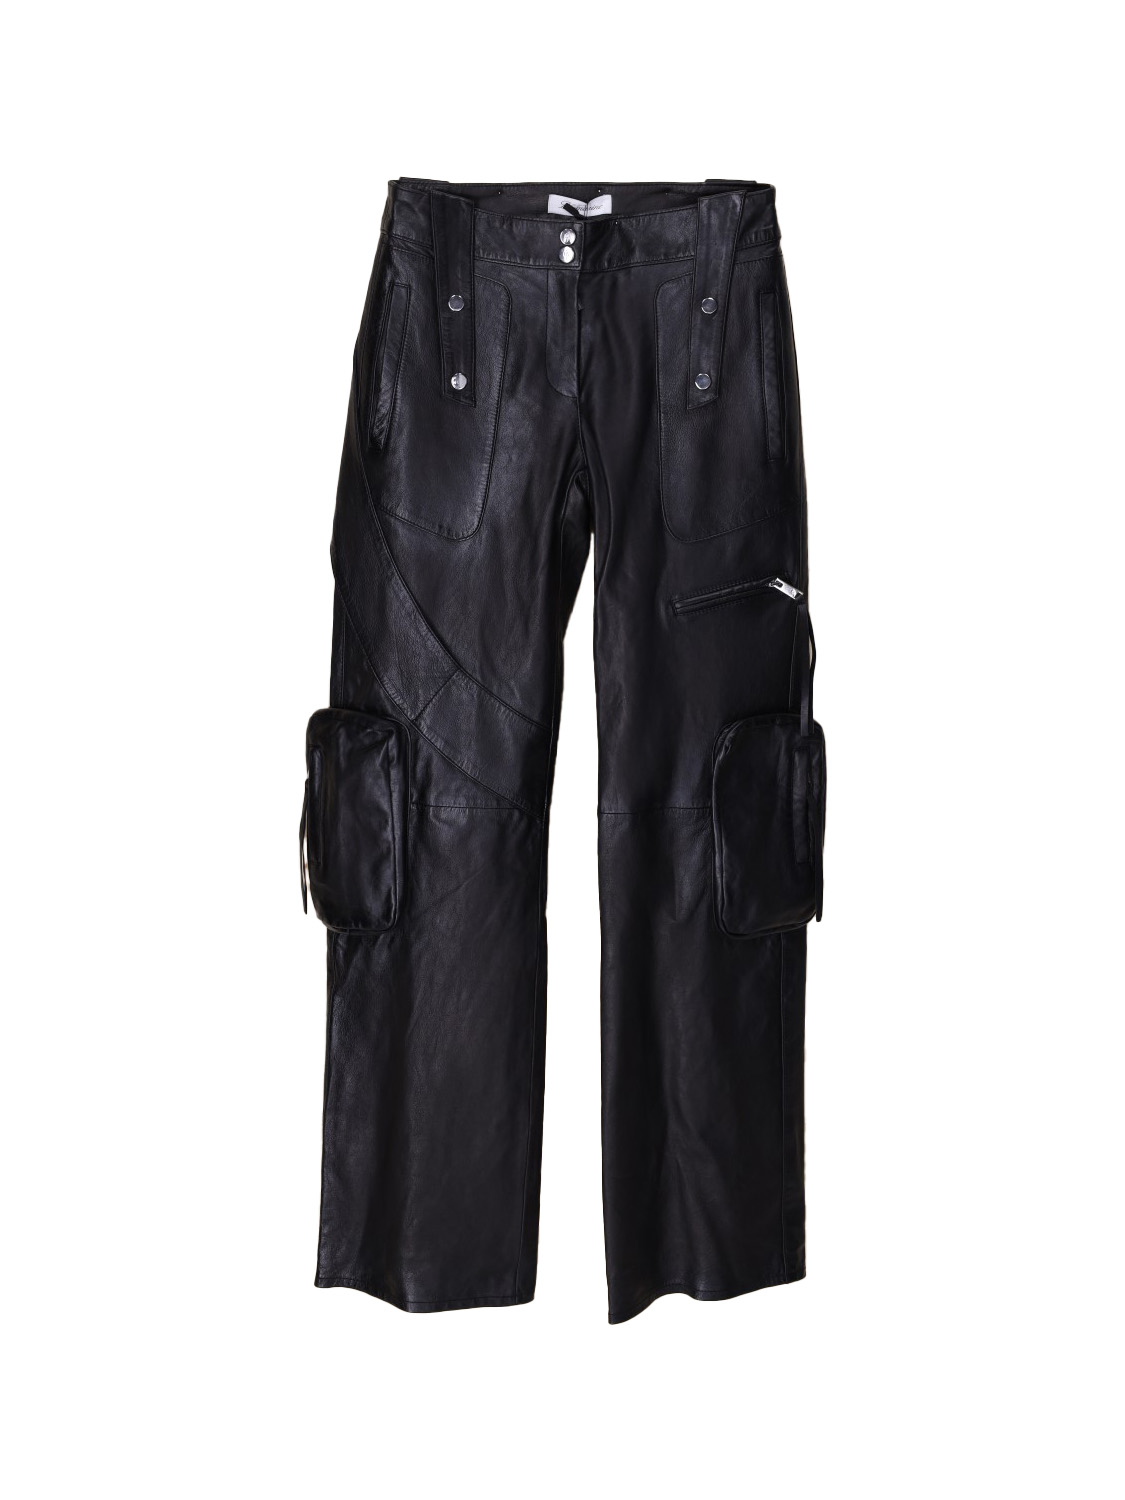 Pantalone Pelle - leather pants with biker details 